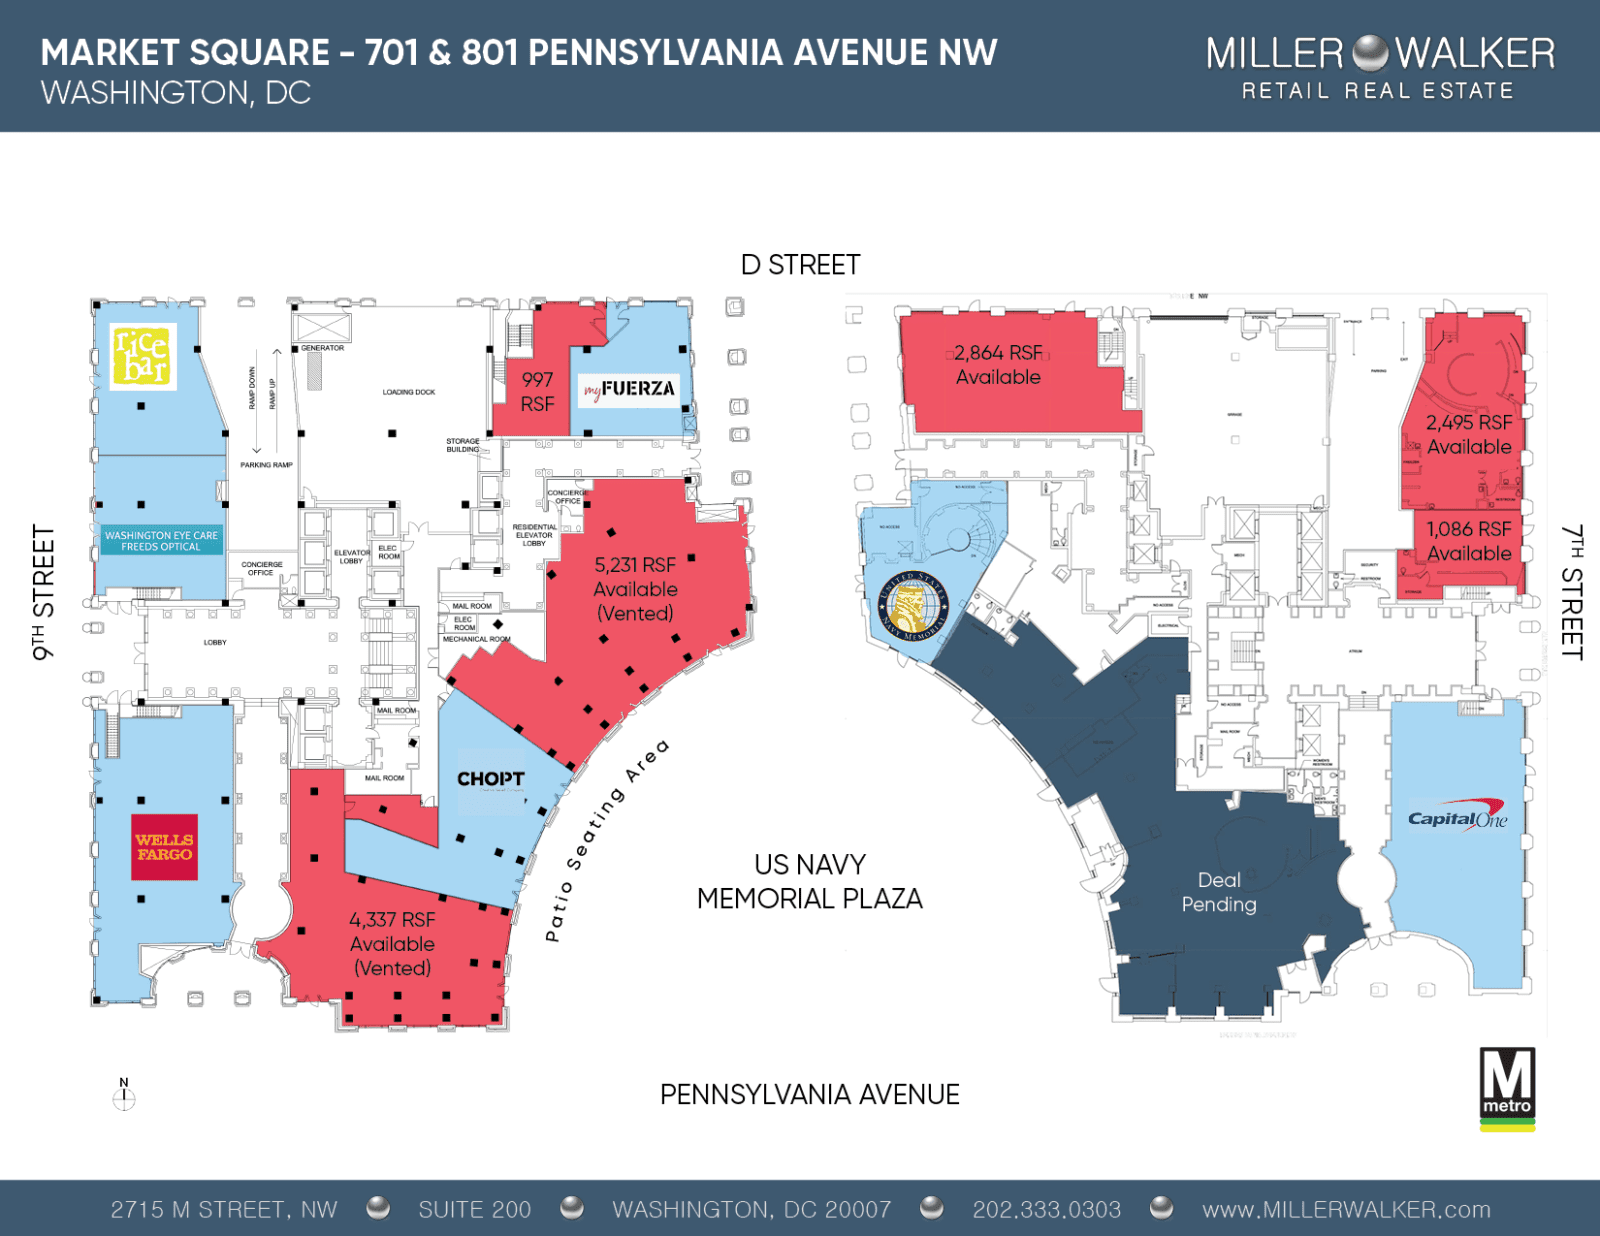 market square 701 pennsylvania avenue leasing plans for brokers